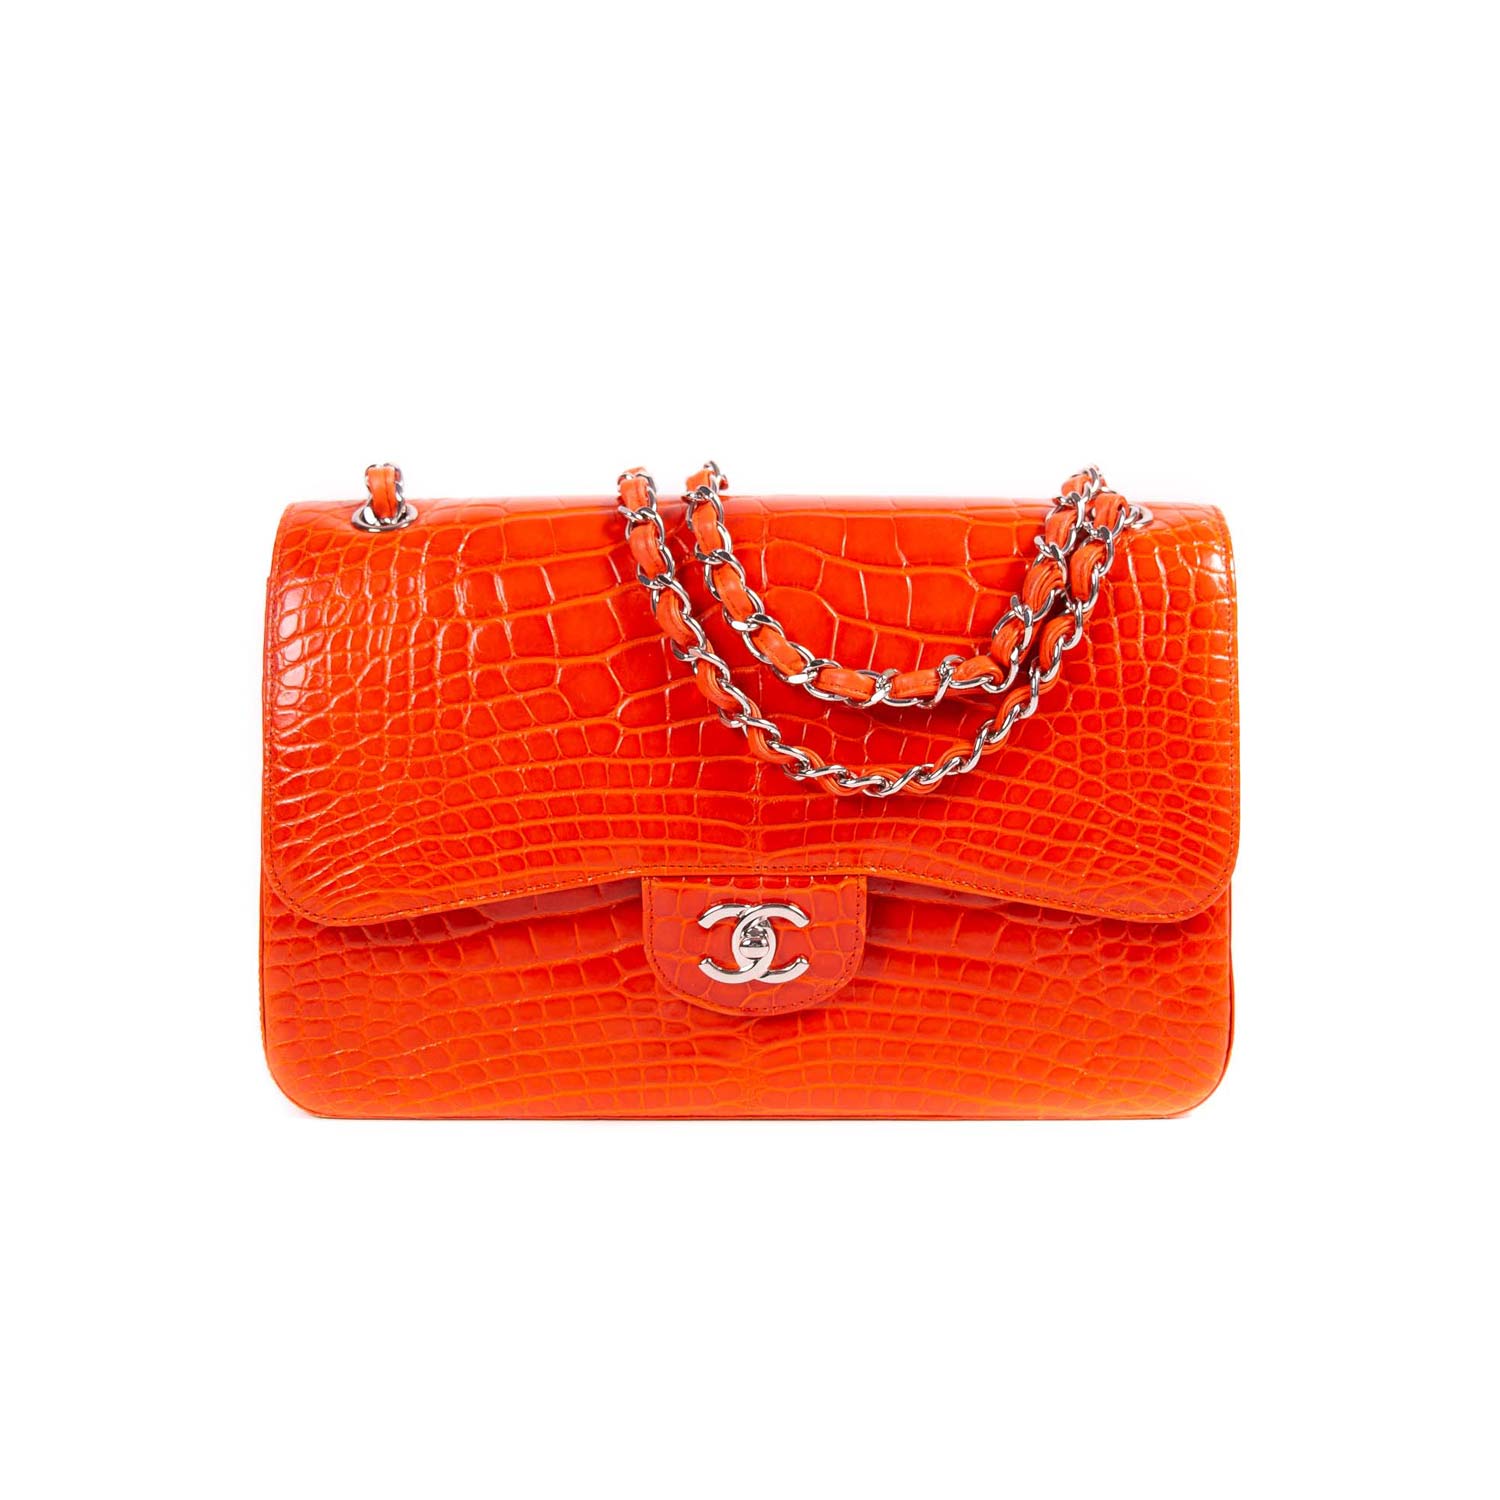 Chanel Classic Jumbo Double Flap Bag in Shiny Orange Alligator